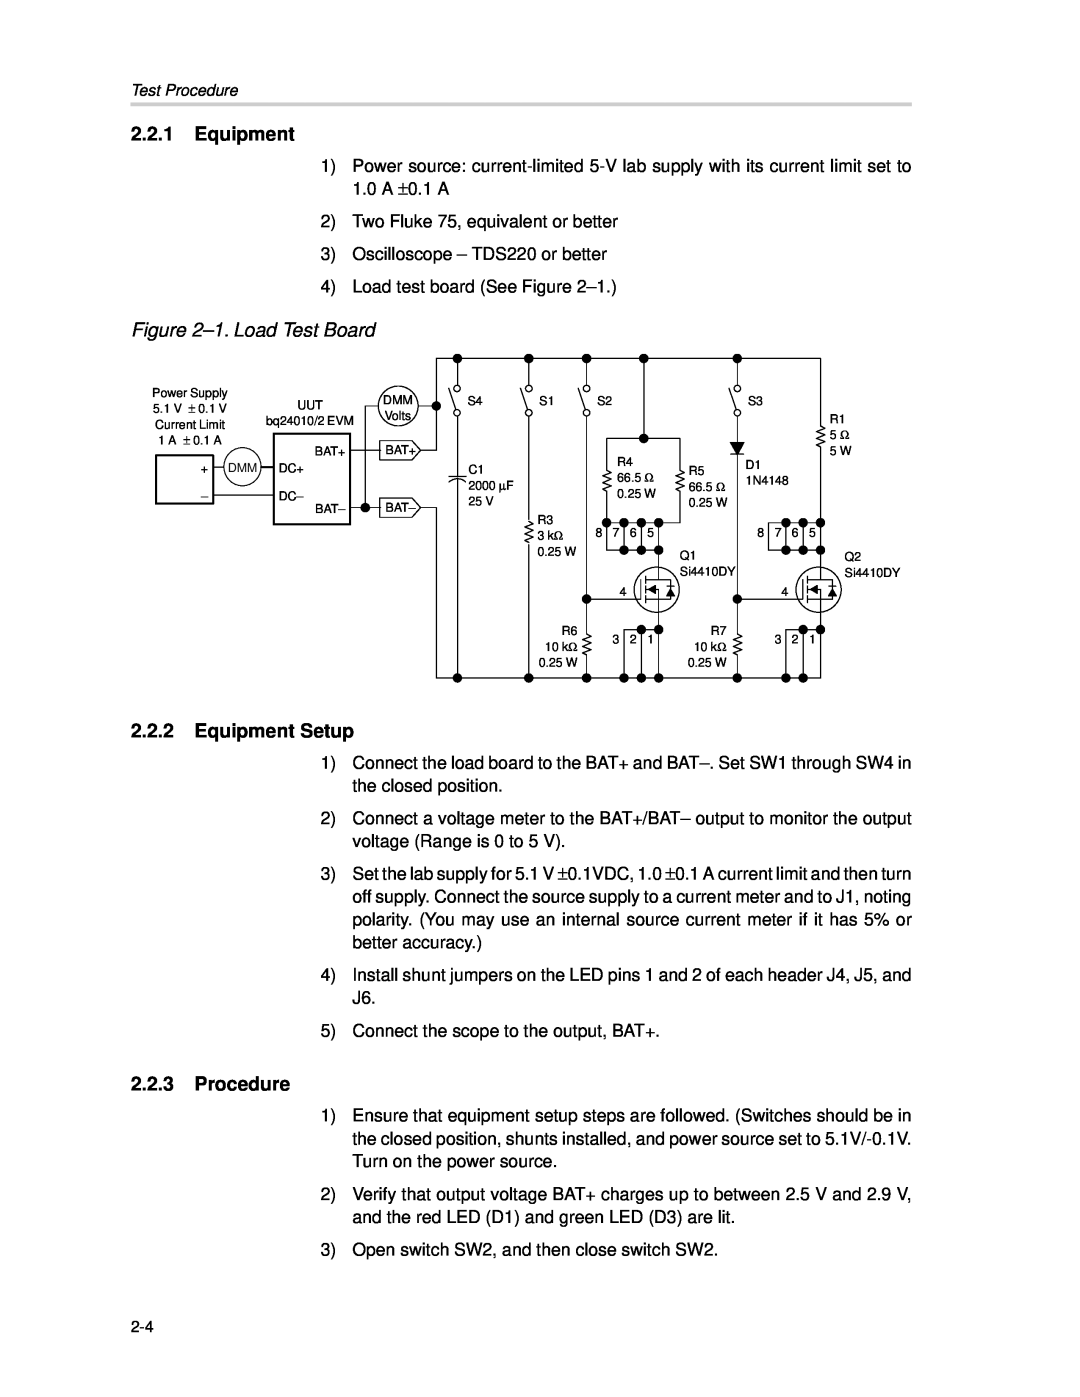 Texas Instruments bq24010/2 manual 1. Load Test Board, Equipment Setup, Procedure 